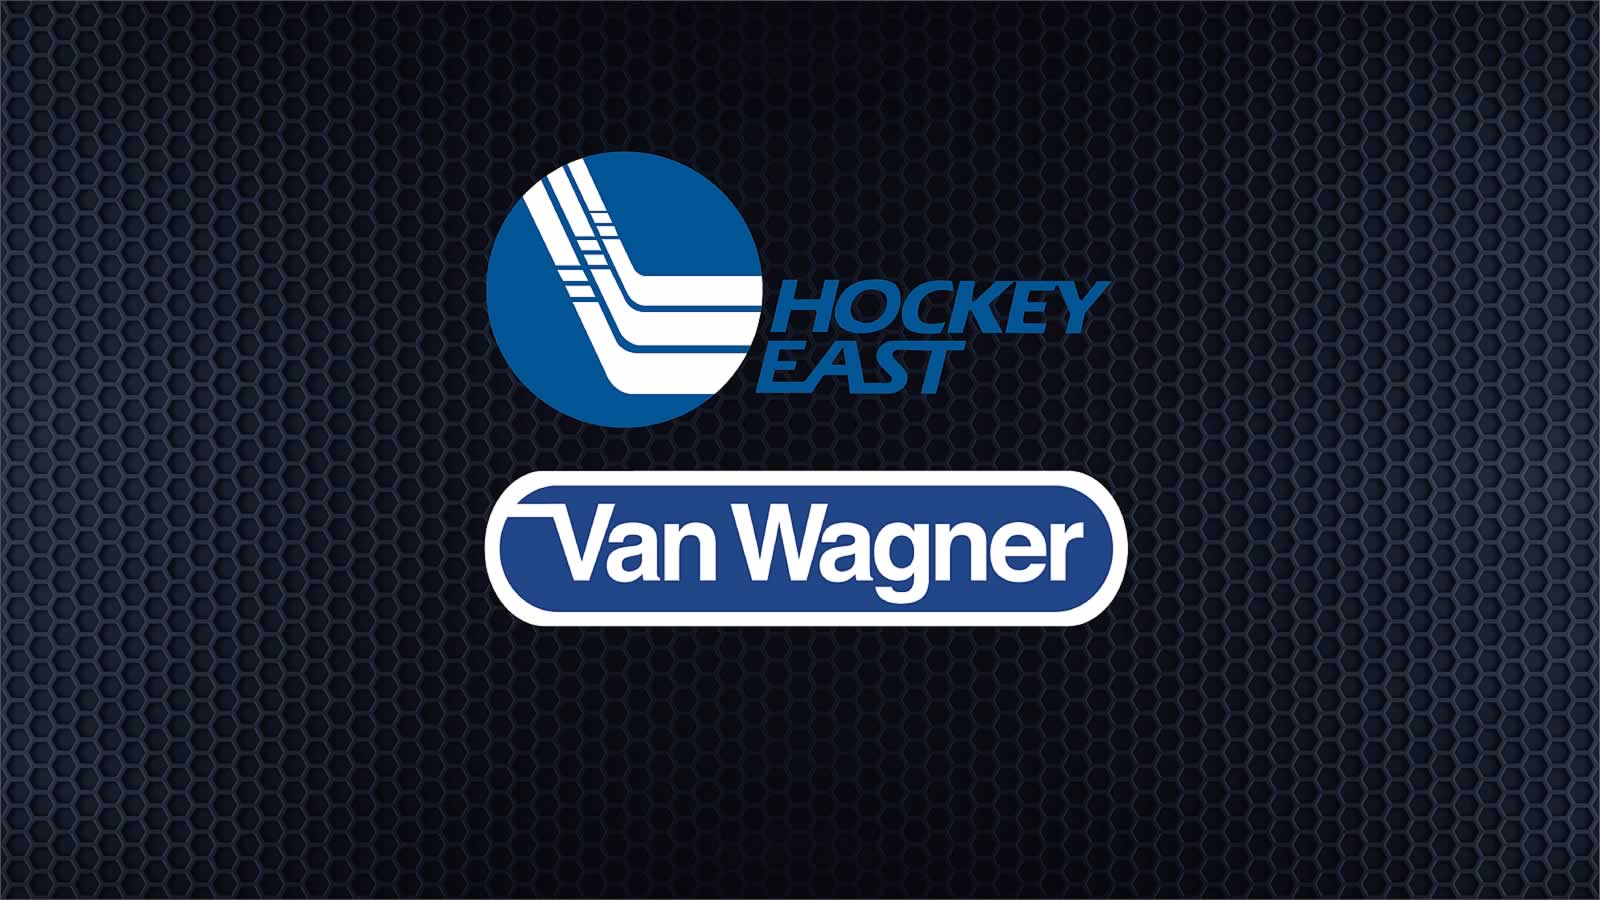 Hockey East Association and Van Wagner Announce Multi-Year Partnership